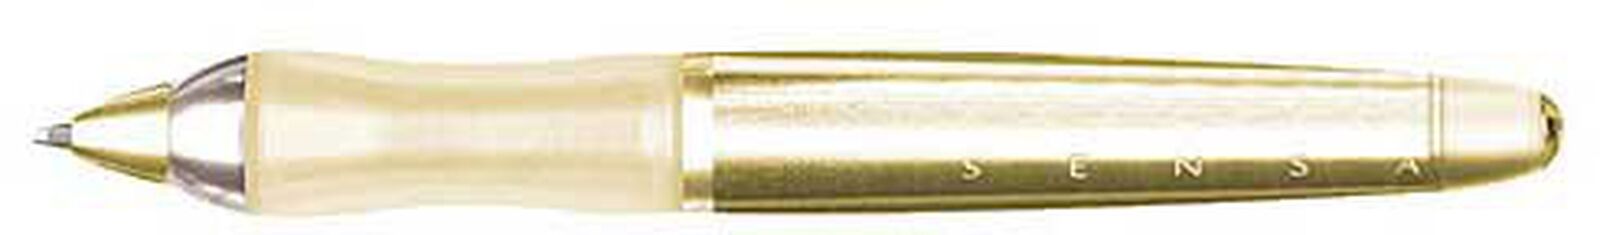 Sensa Minx Geneva Gold Ballpoint Pen Original From 2005 In Box Style 32307 New